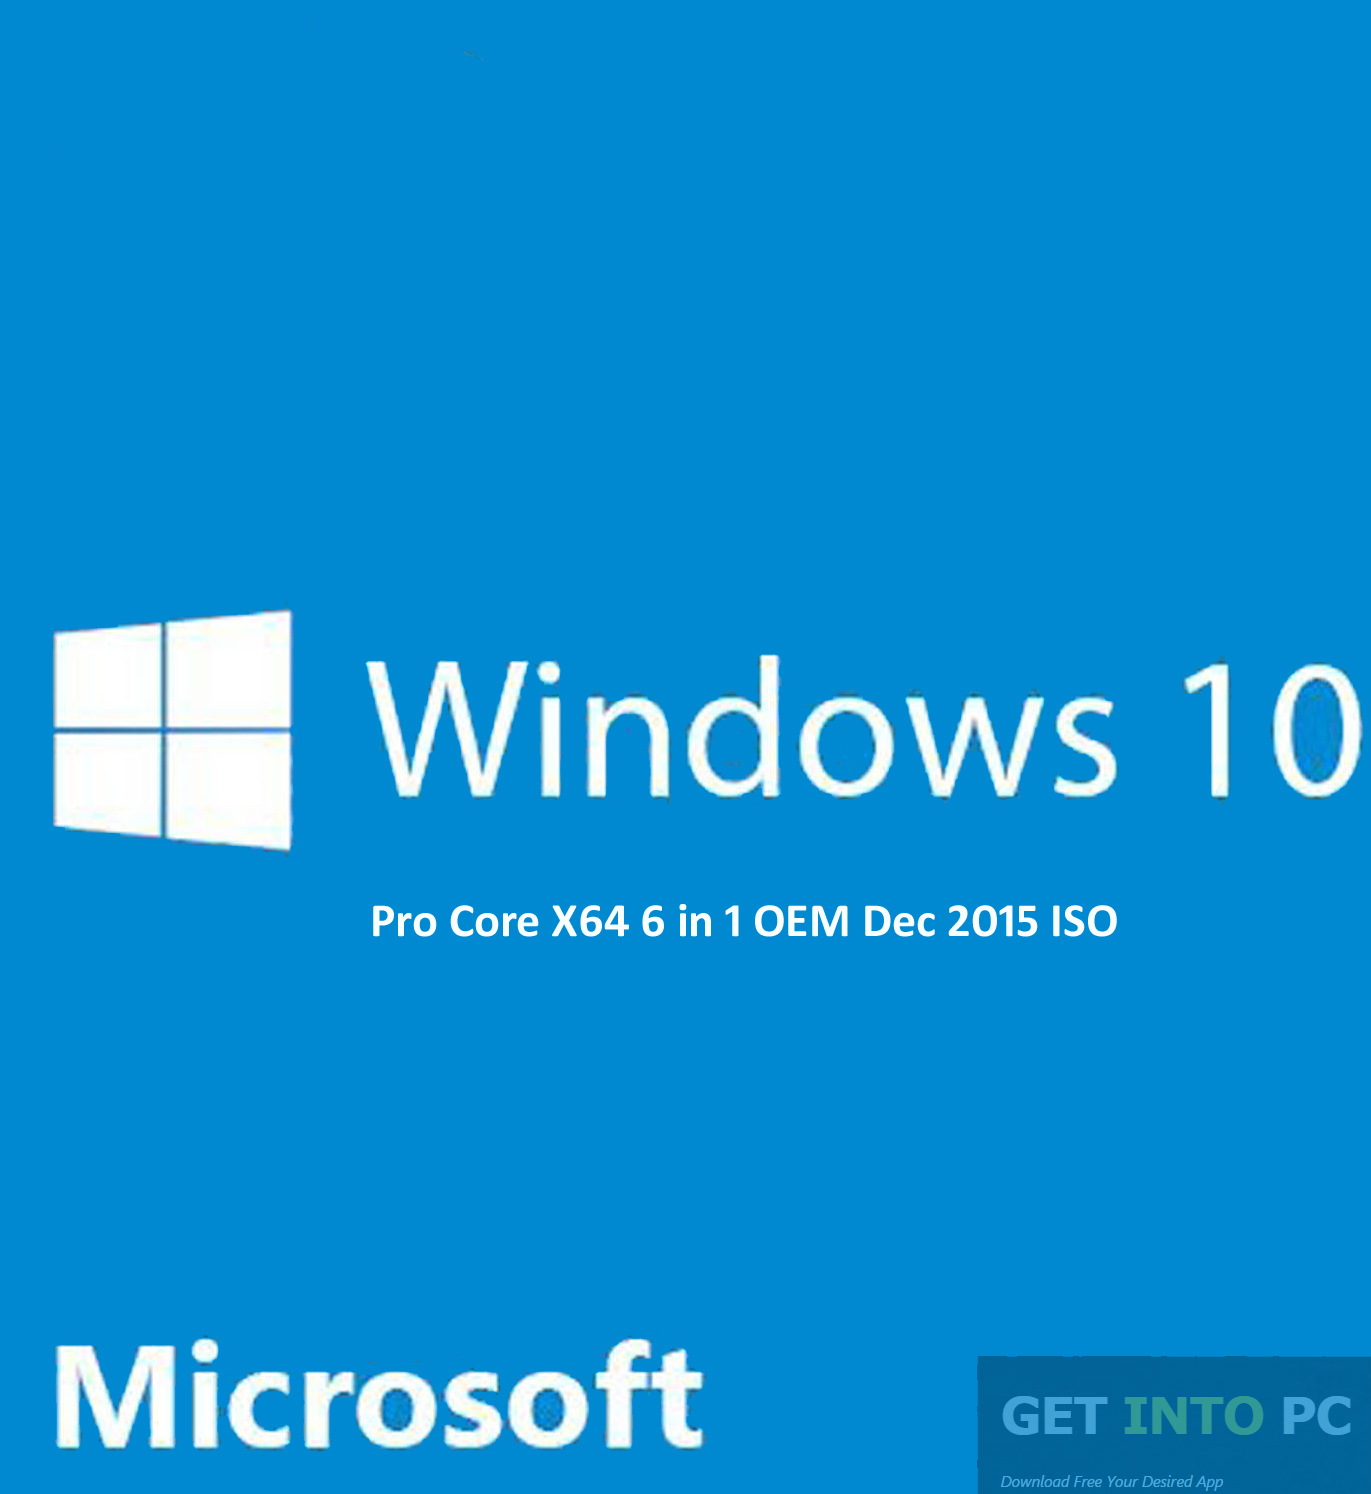 Windows 10 Pro Core X64 6 in 1 OEM Dec 2015 ISO Free Download